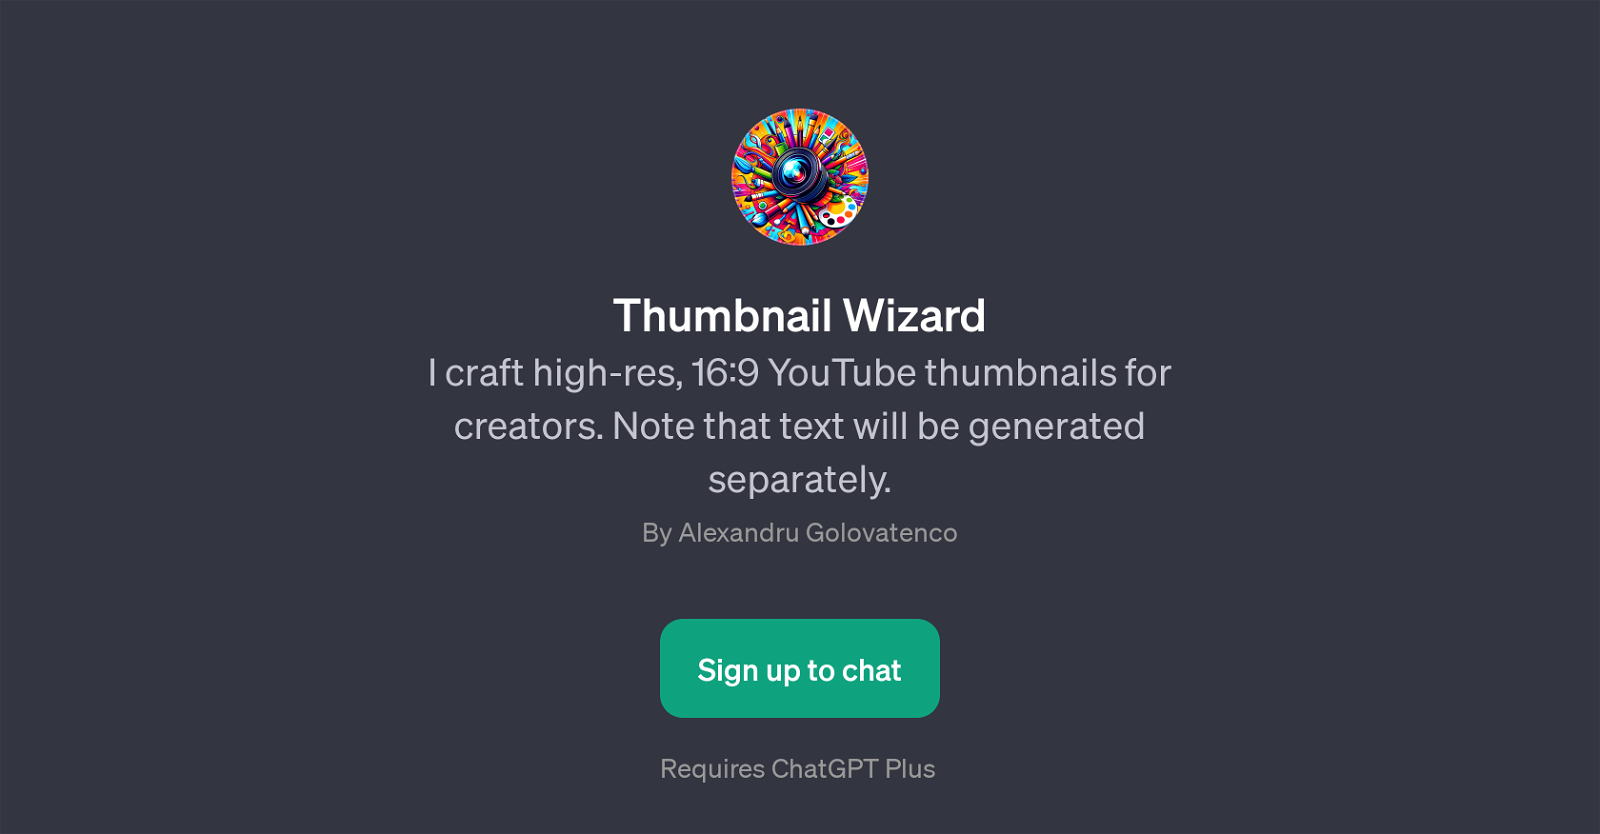 Thumbnail Wizard website